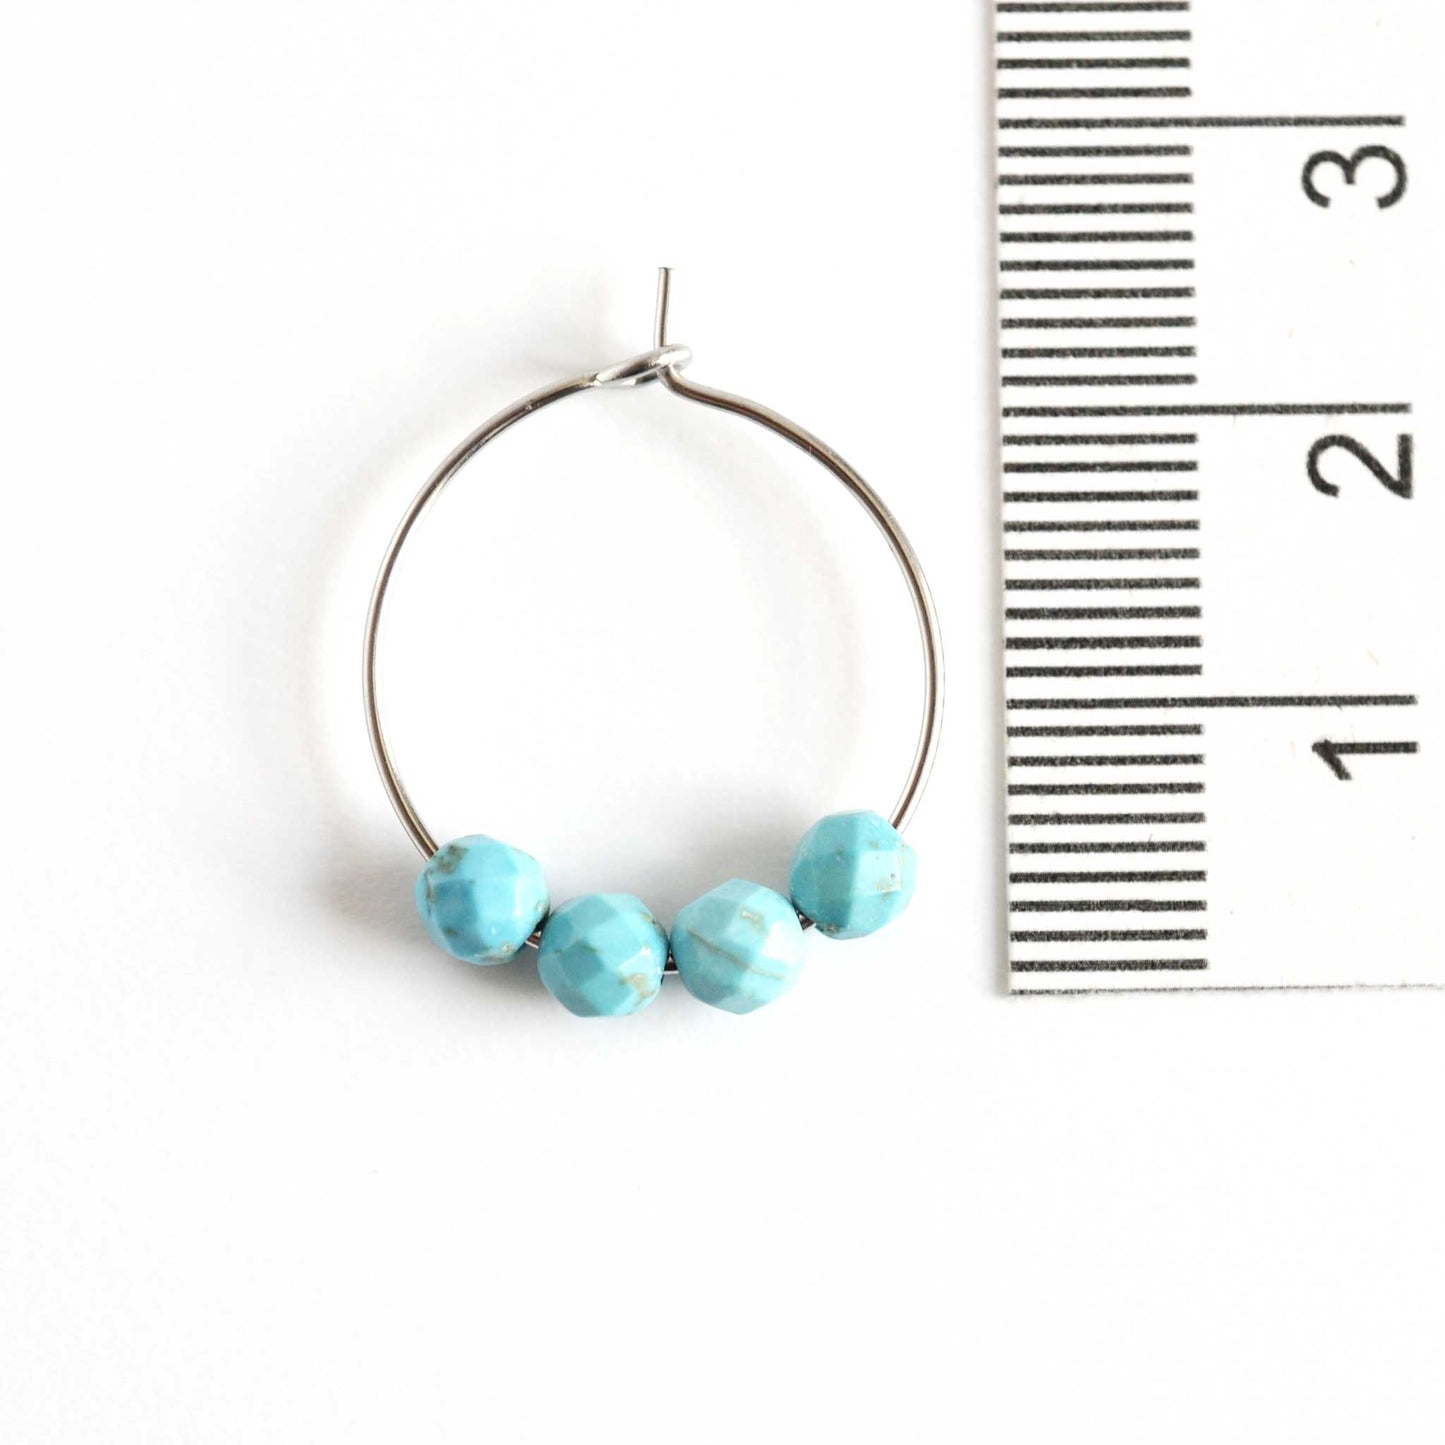 2cm diameter hoop earrings with Turquoise stones next to ruler